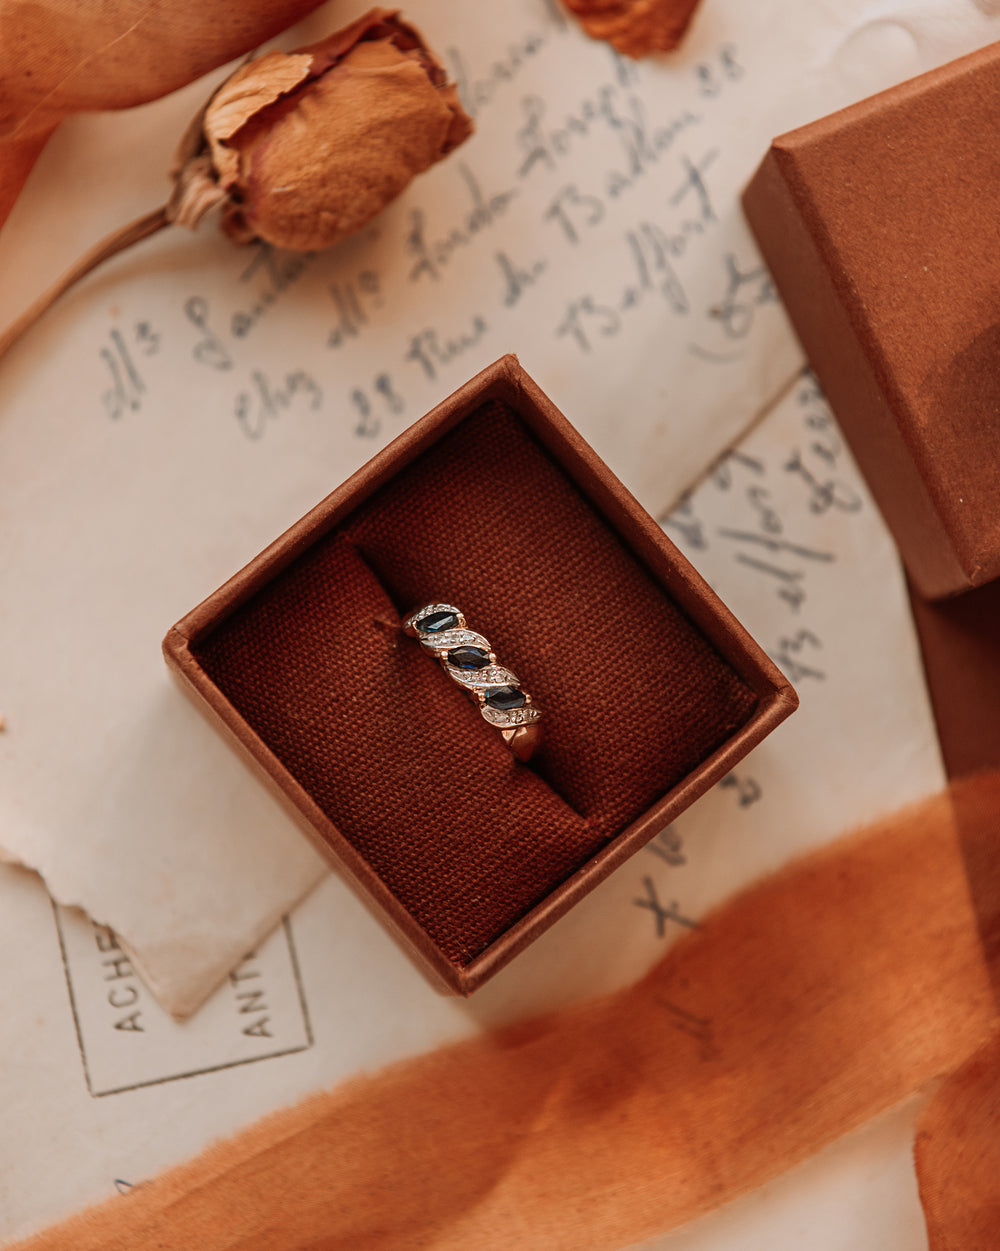 Juno 9ct Gold Vintage Diamond & Sapphire Ring